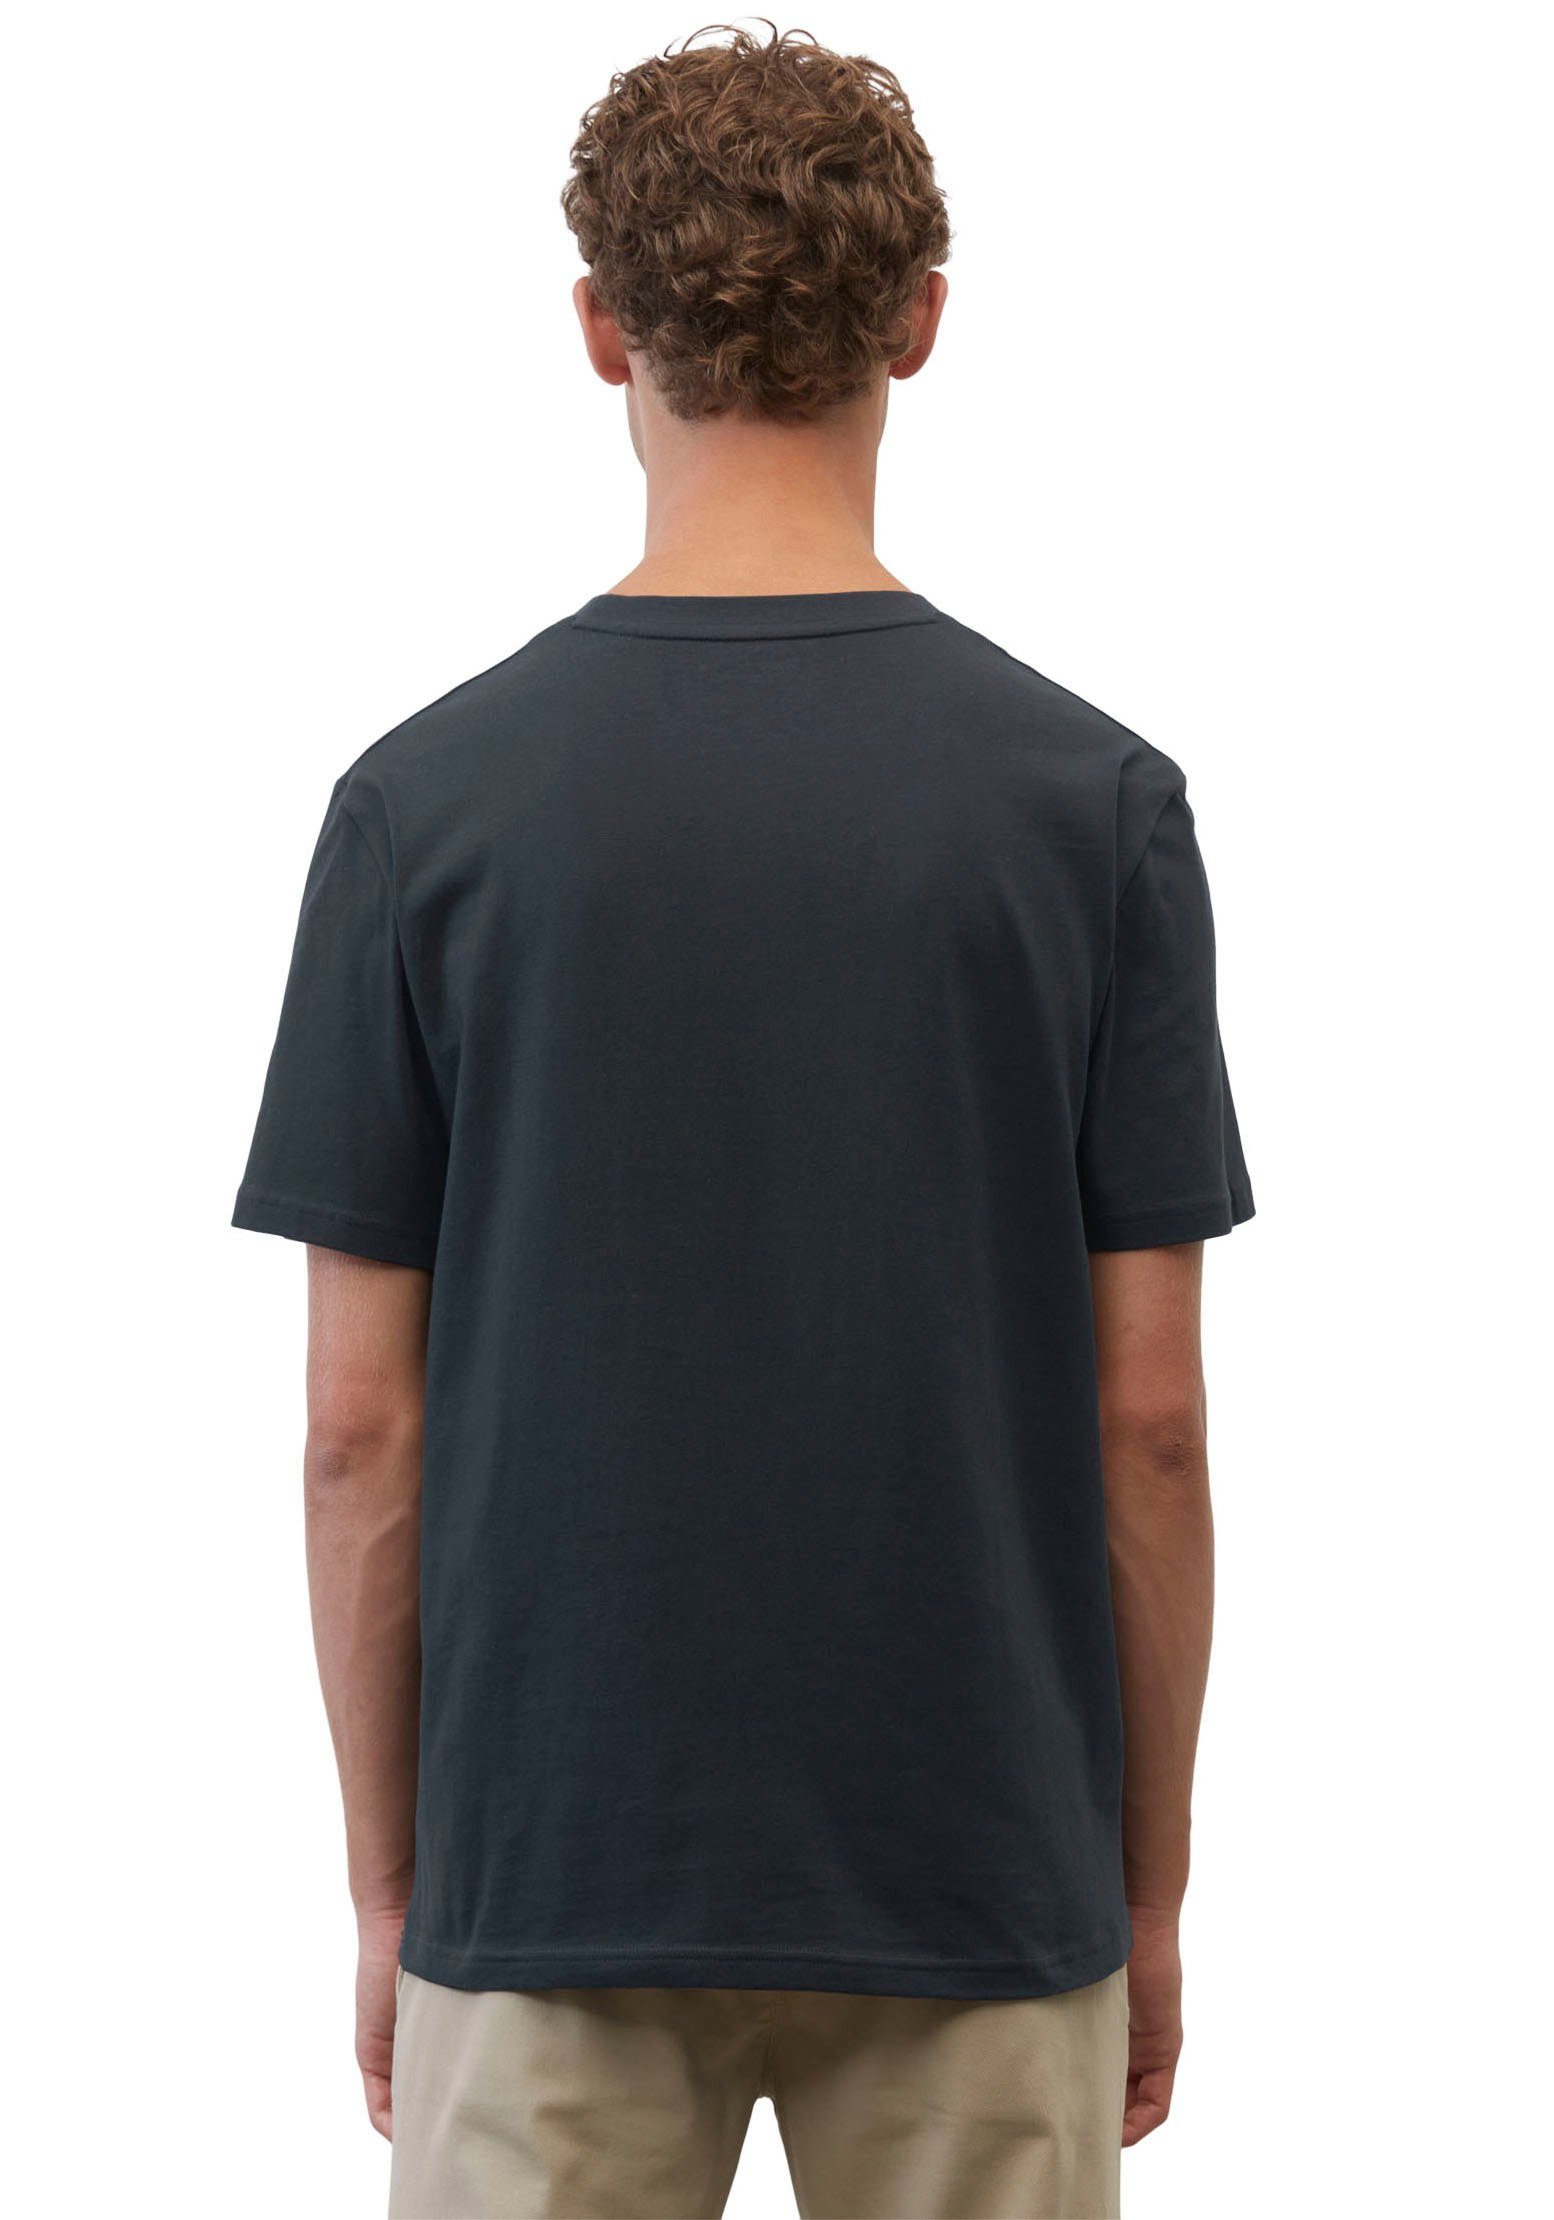 dark O'Polo night Marc T-Shirt klassisches Logo-T-Shirt